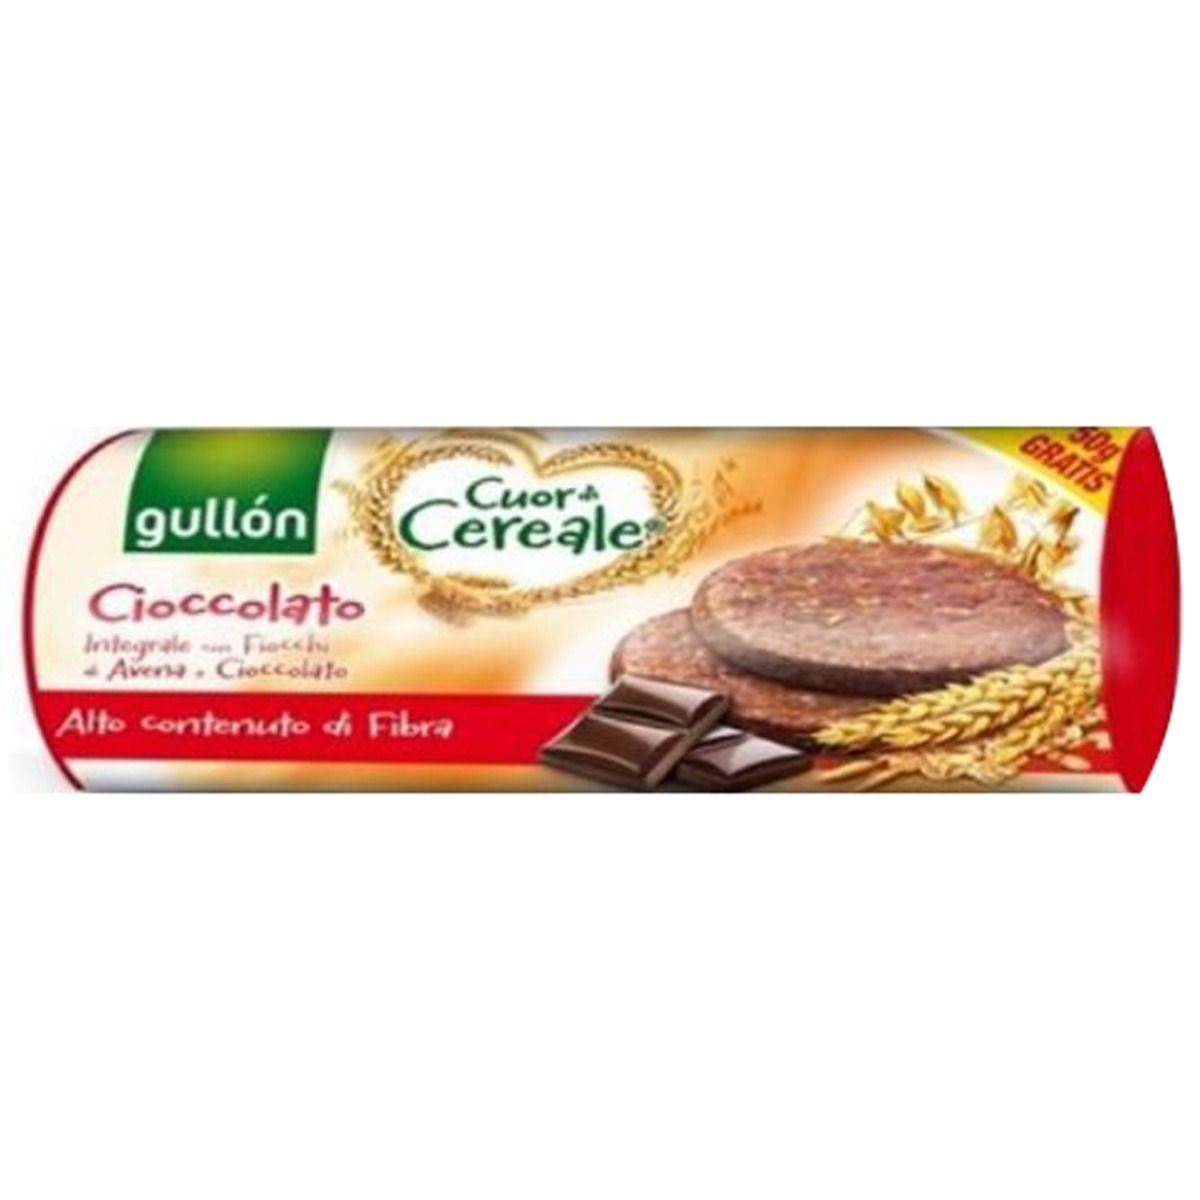 Buy Gullon Cuor di Cereale Chocolate 280 gm Online